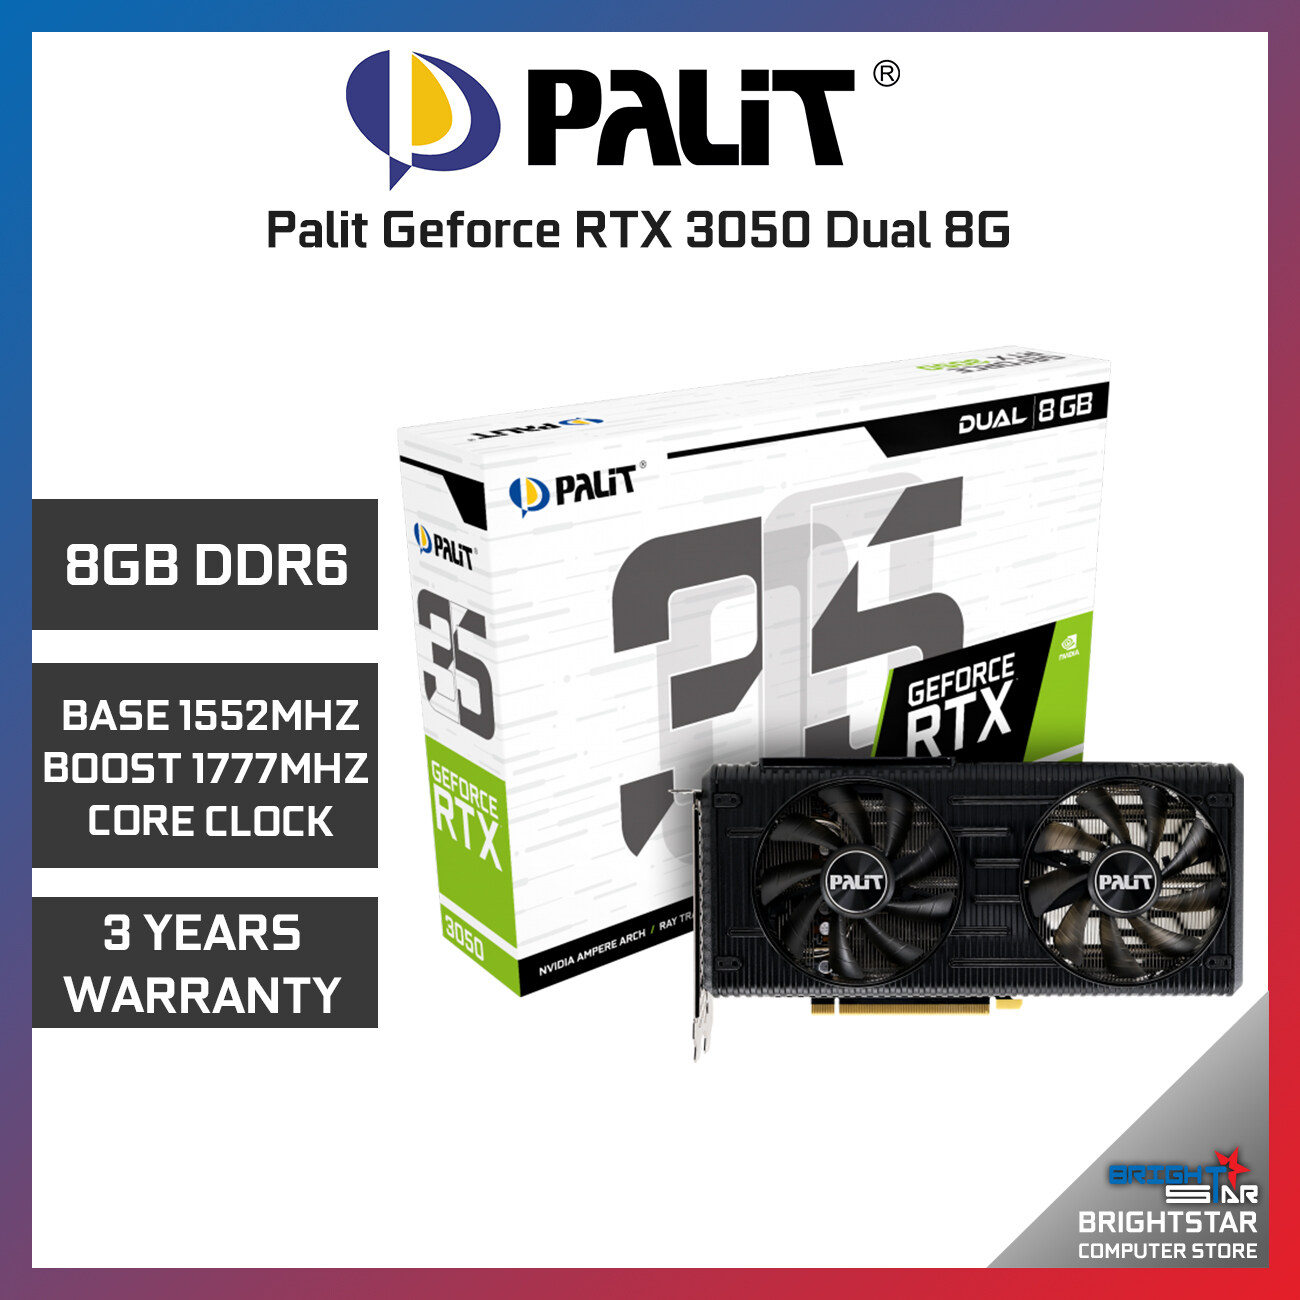 Palit Geforce RTX 3050 Dual 8G DDR6 Graphic Card - Brightstar Computer